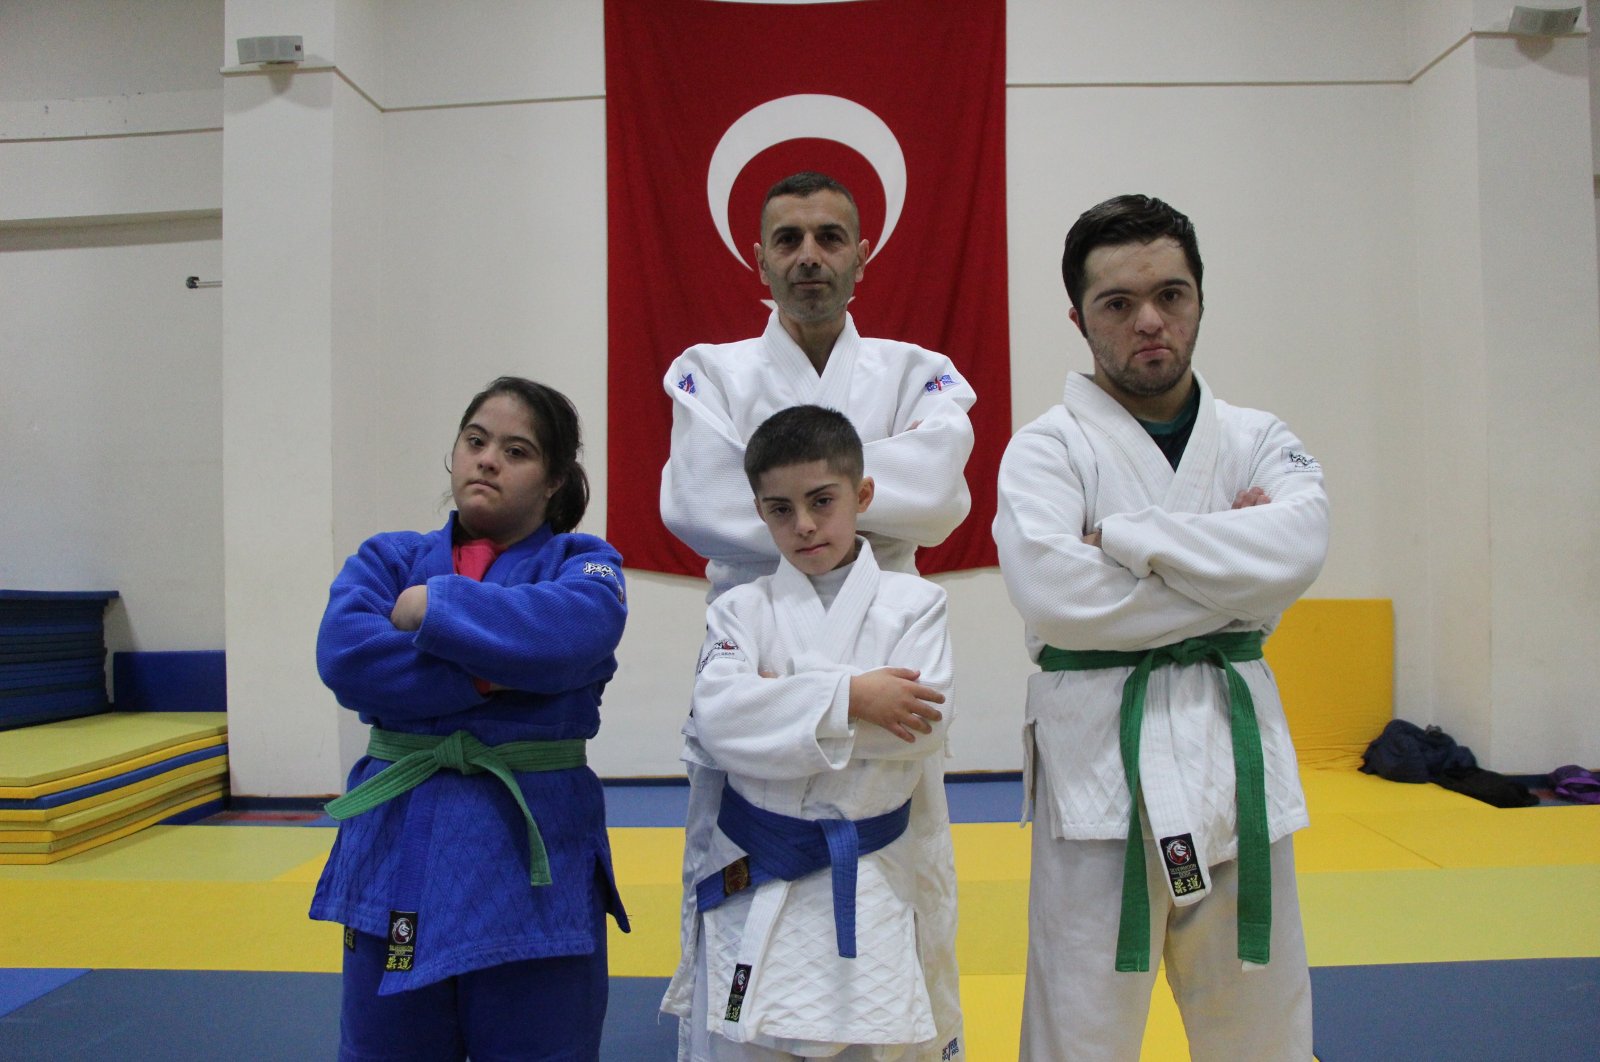 Judokas Türkiye dengan sindrom Down mengincar kejuaraan